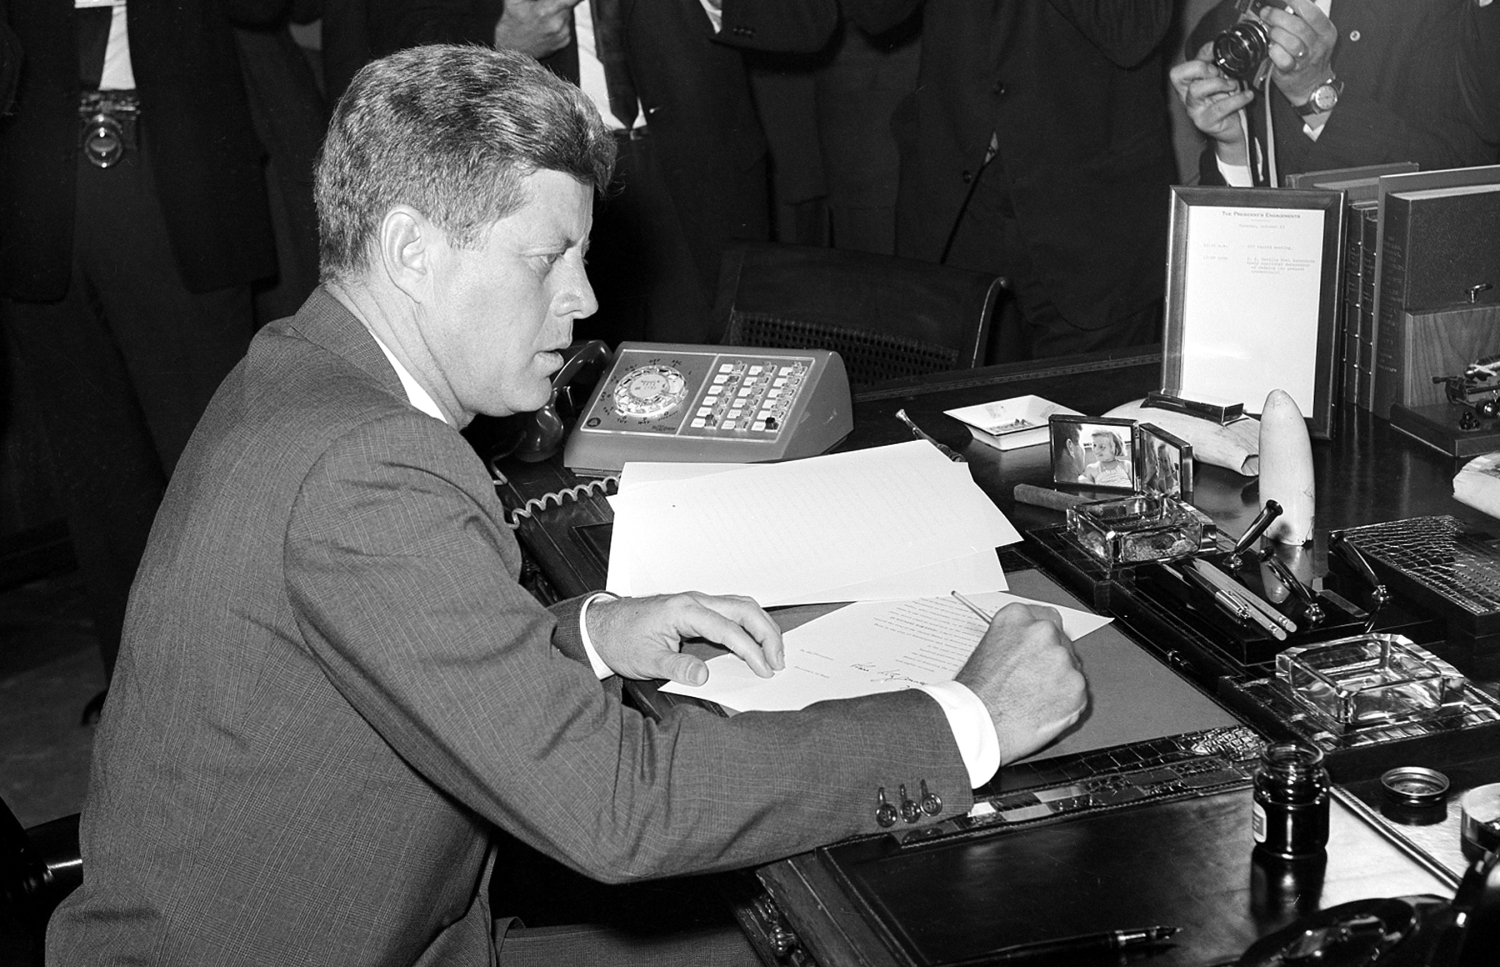 Subastan por 26.000 euros la carta que Kennedy mandó a su amante antes de ser asesinado